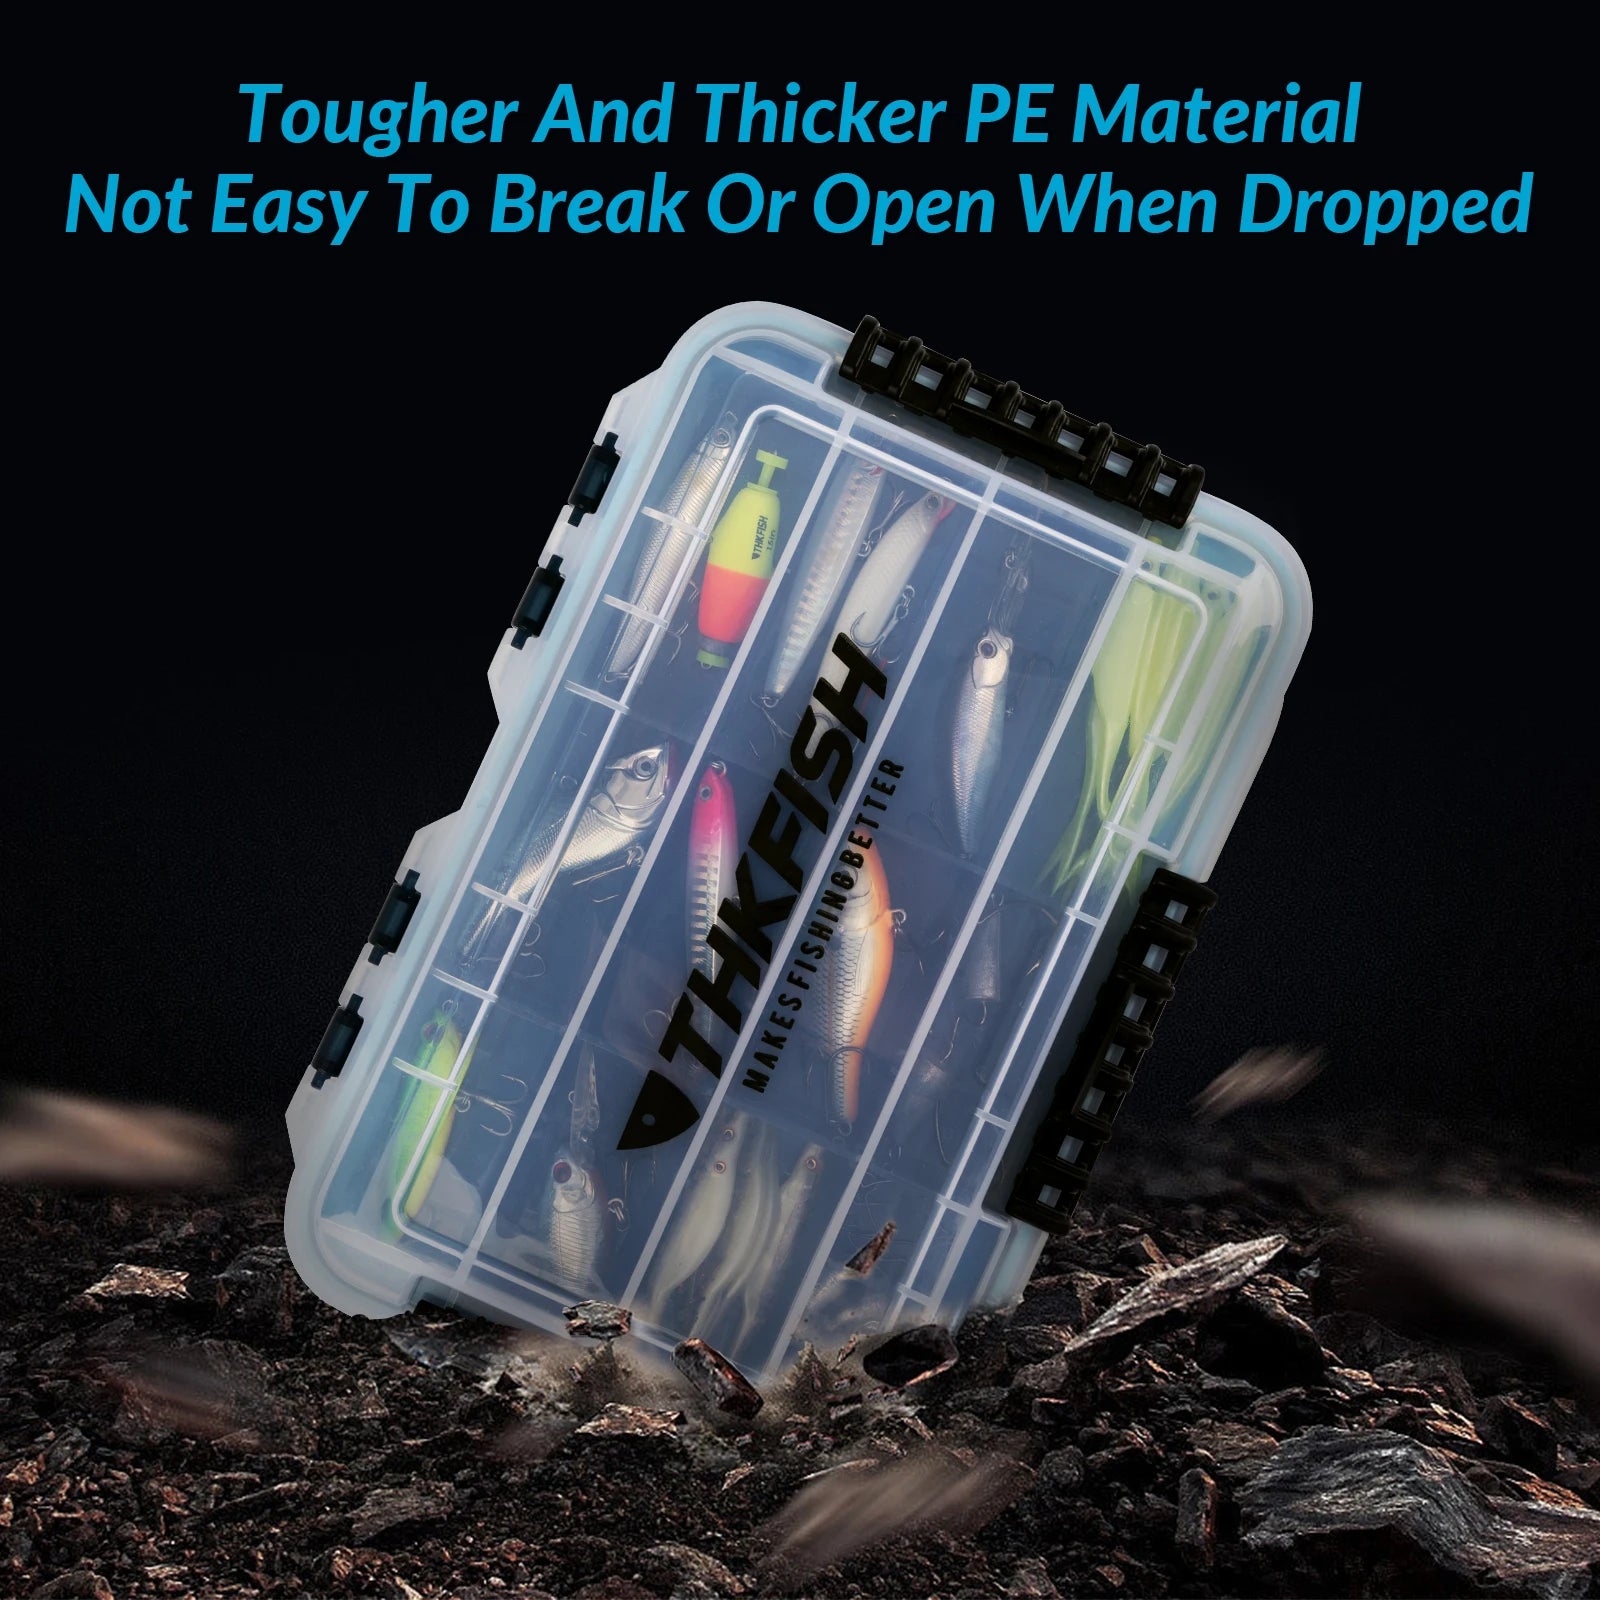 THKFISH 1pc Fishing Tackle Box 3600 3700 No-Slip Design Waterproof